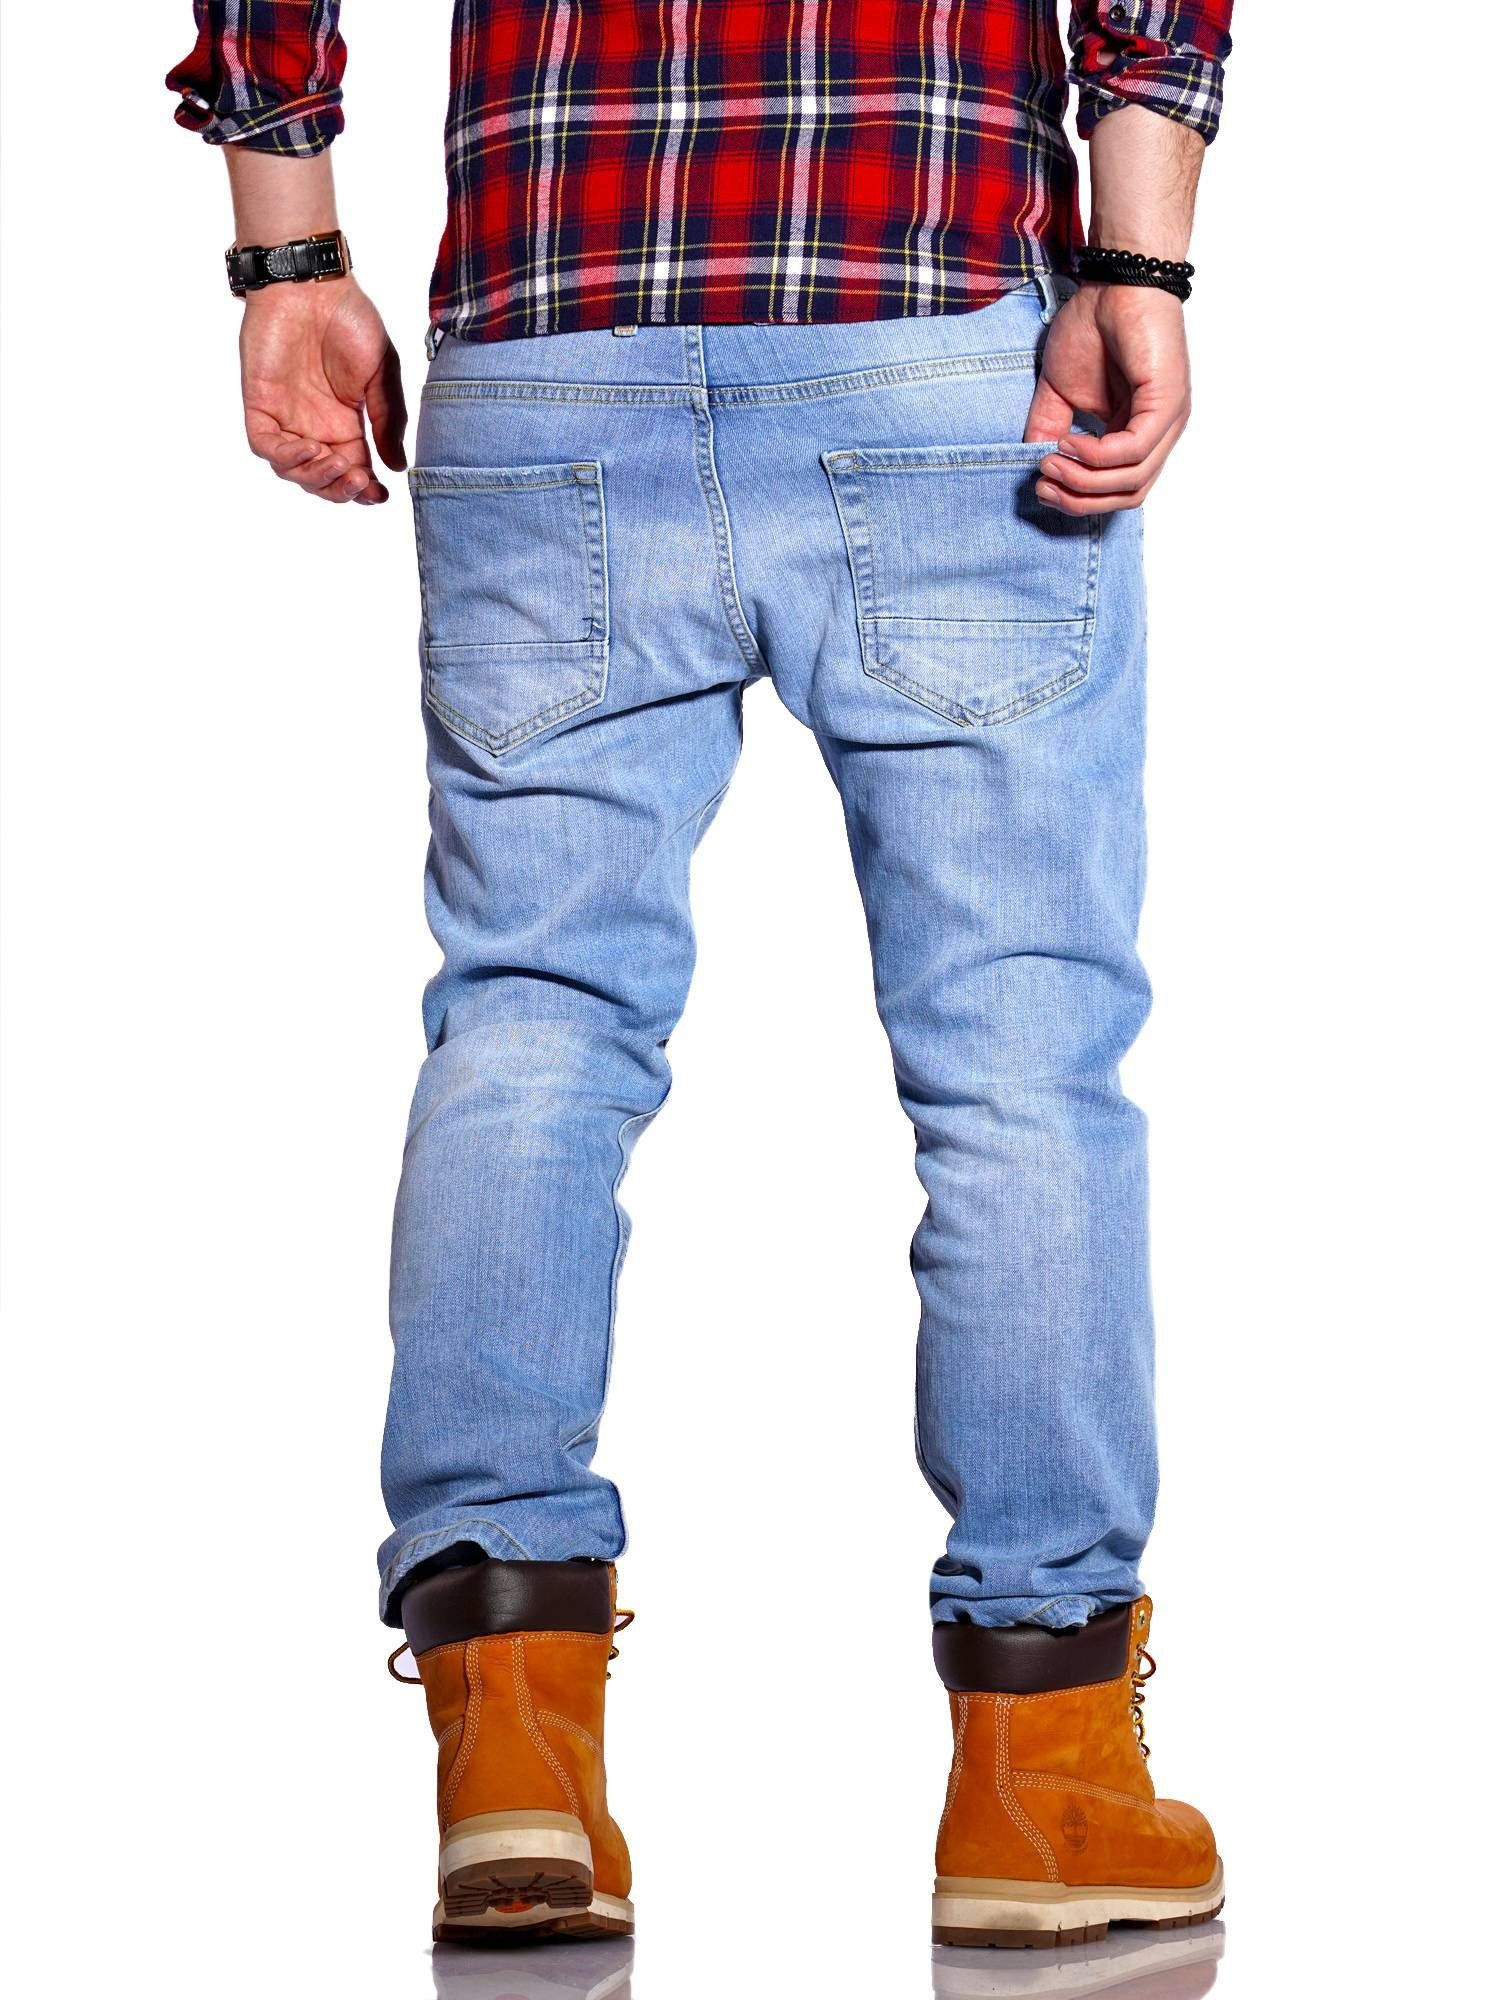 Nick im & hellblau Rello Reese geraden Schnitt Straight-Jeans